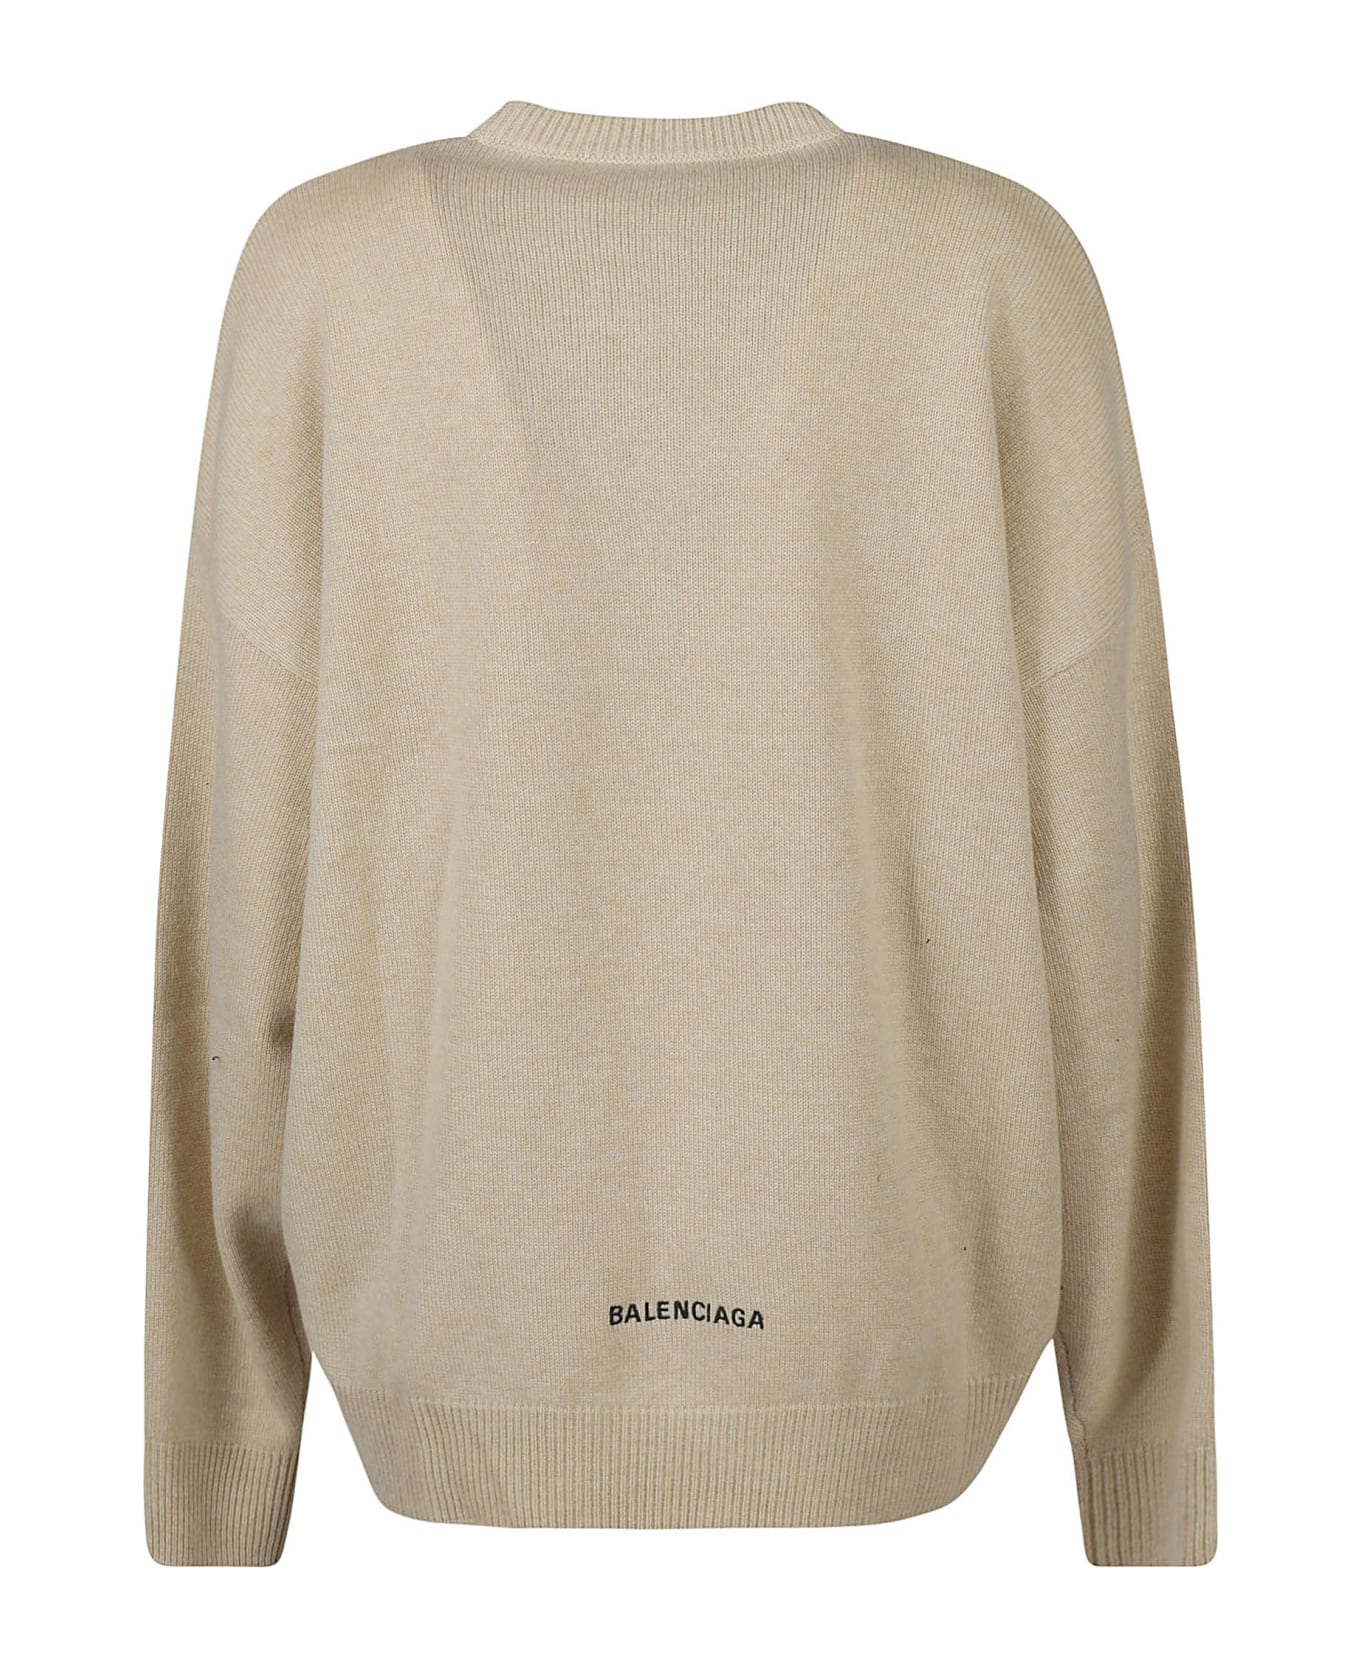 Balenciaga Rib Trim Plain Sweater - Beige